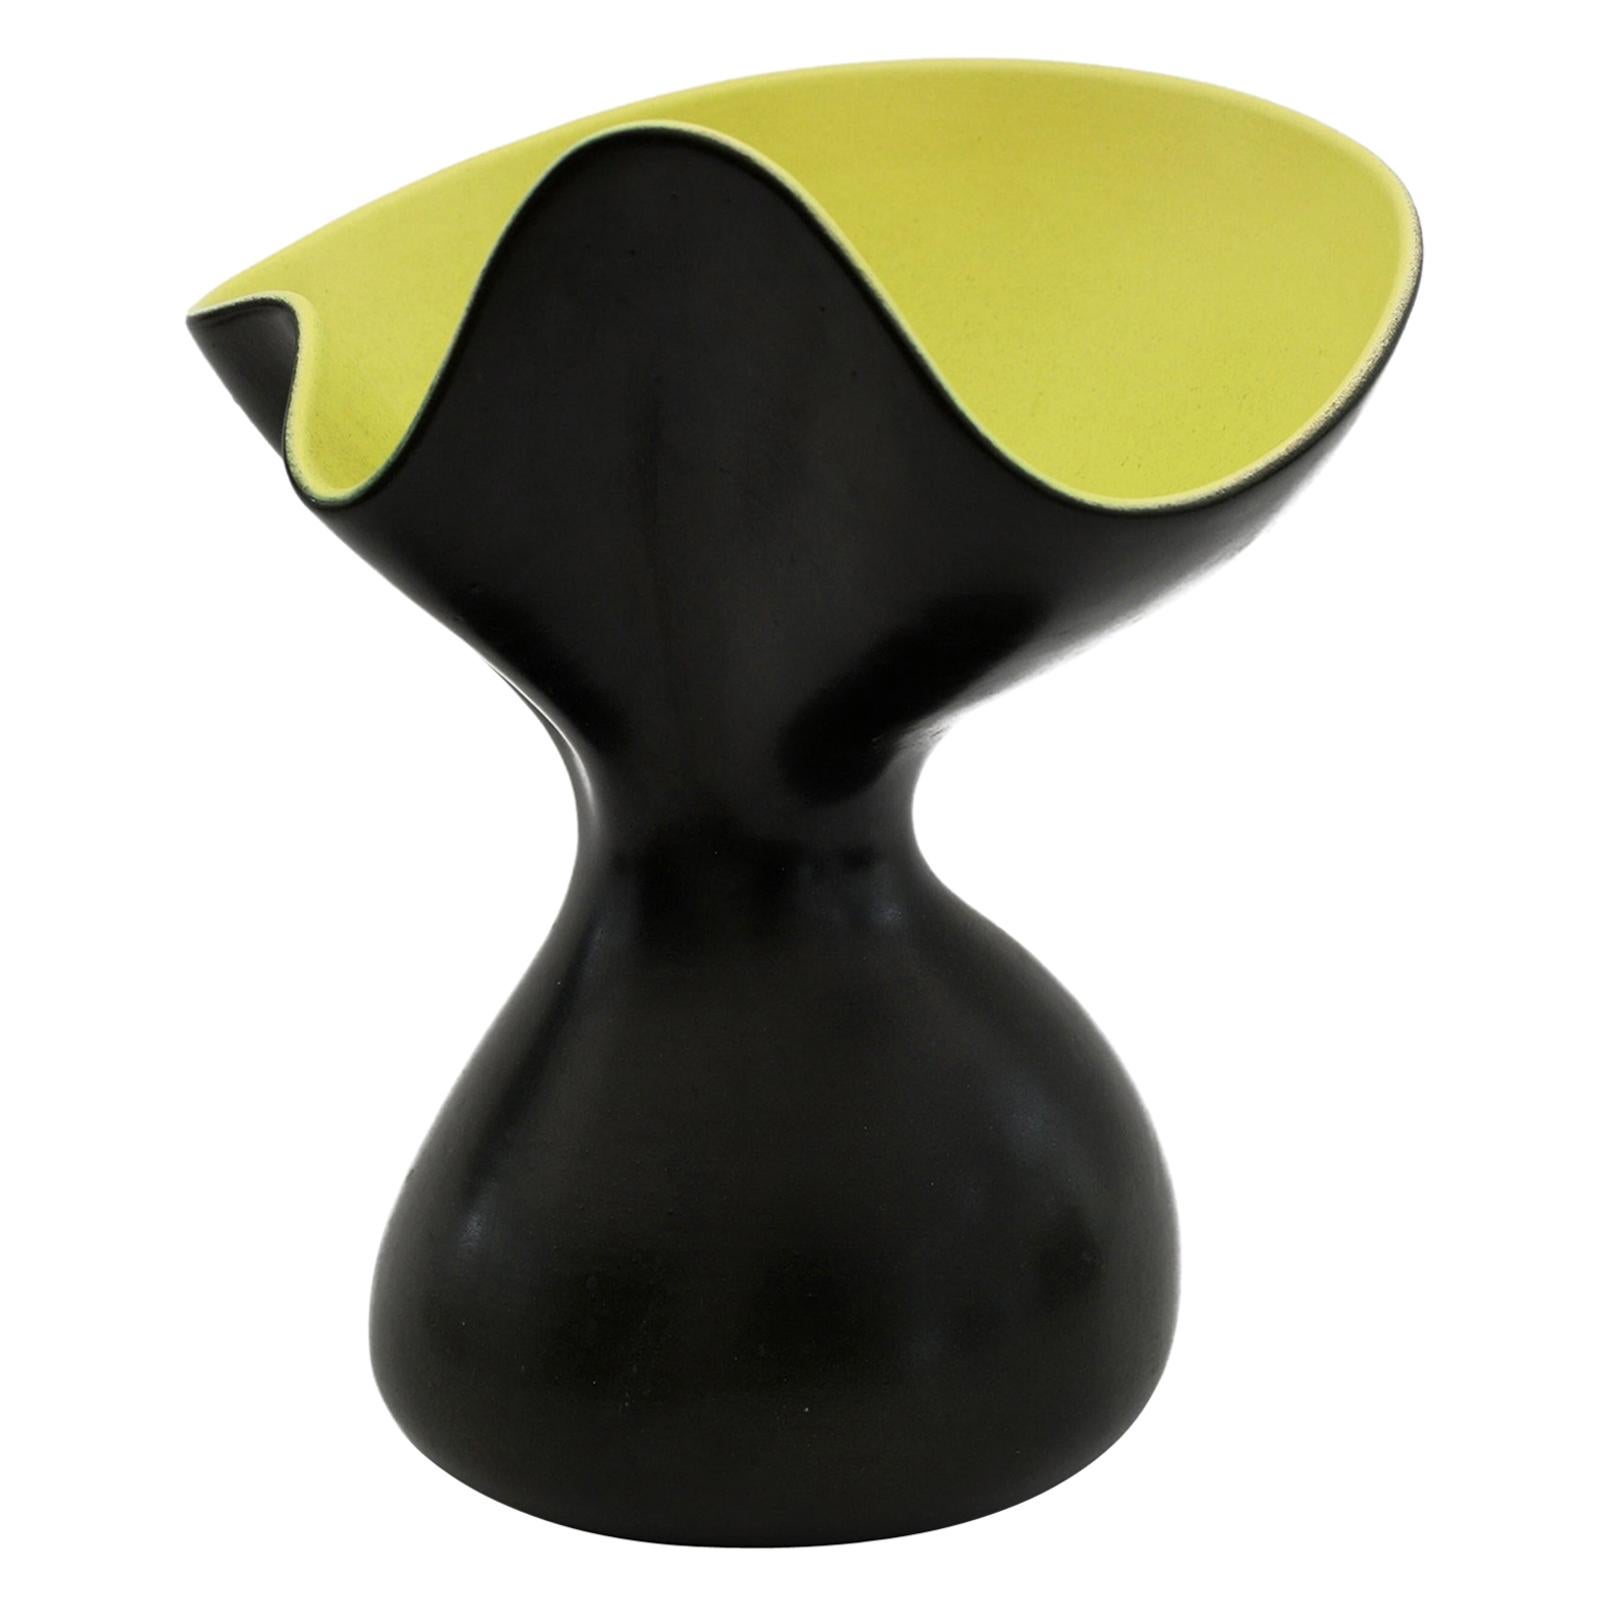 Pol Chambost Iconic Corolle Art Pottery Black & Yellow Glazed Vase Designed 1955